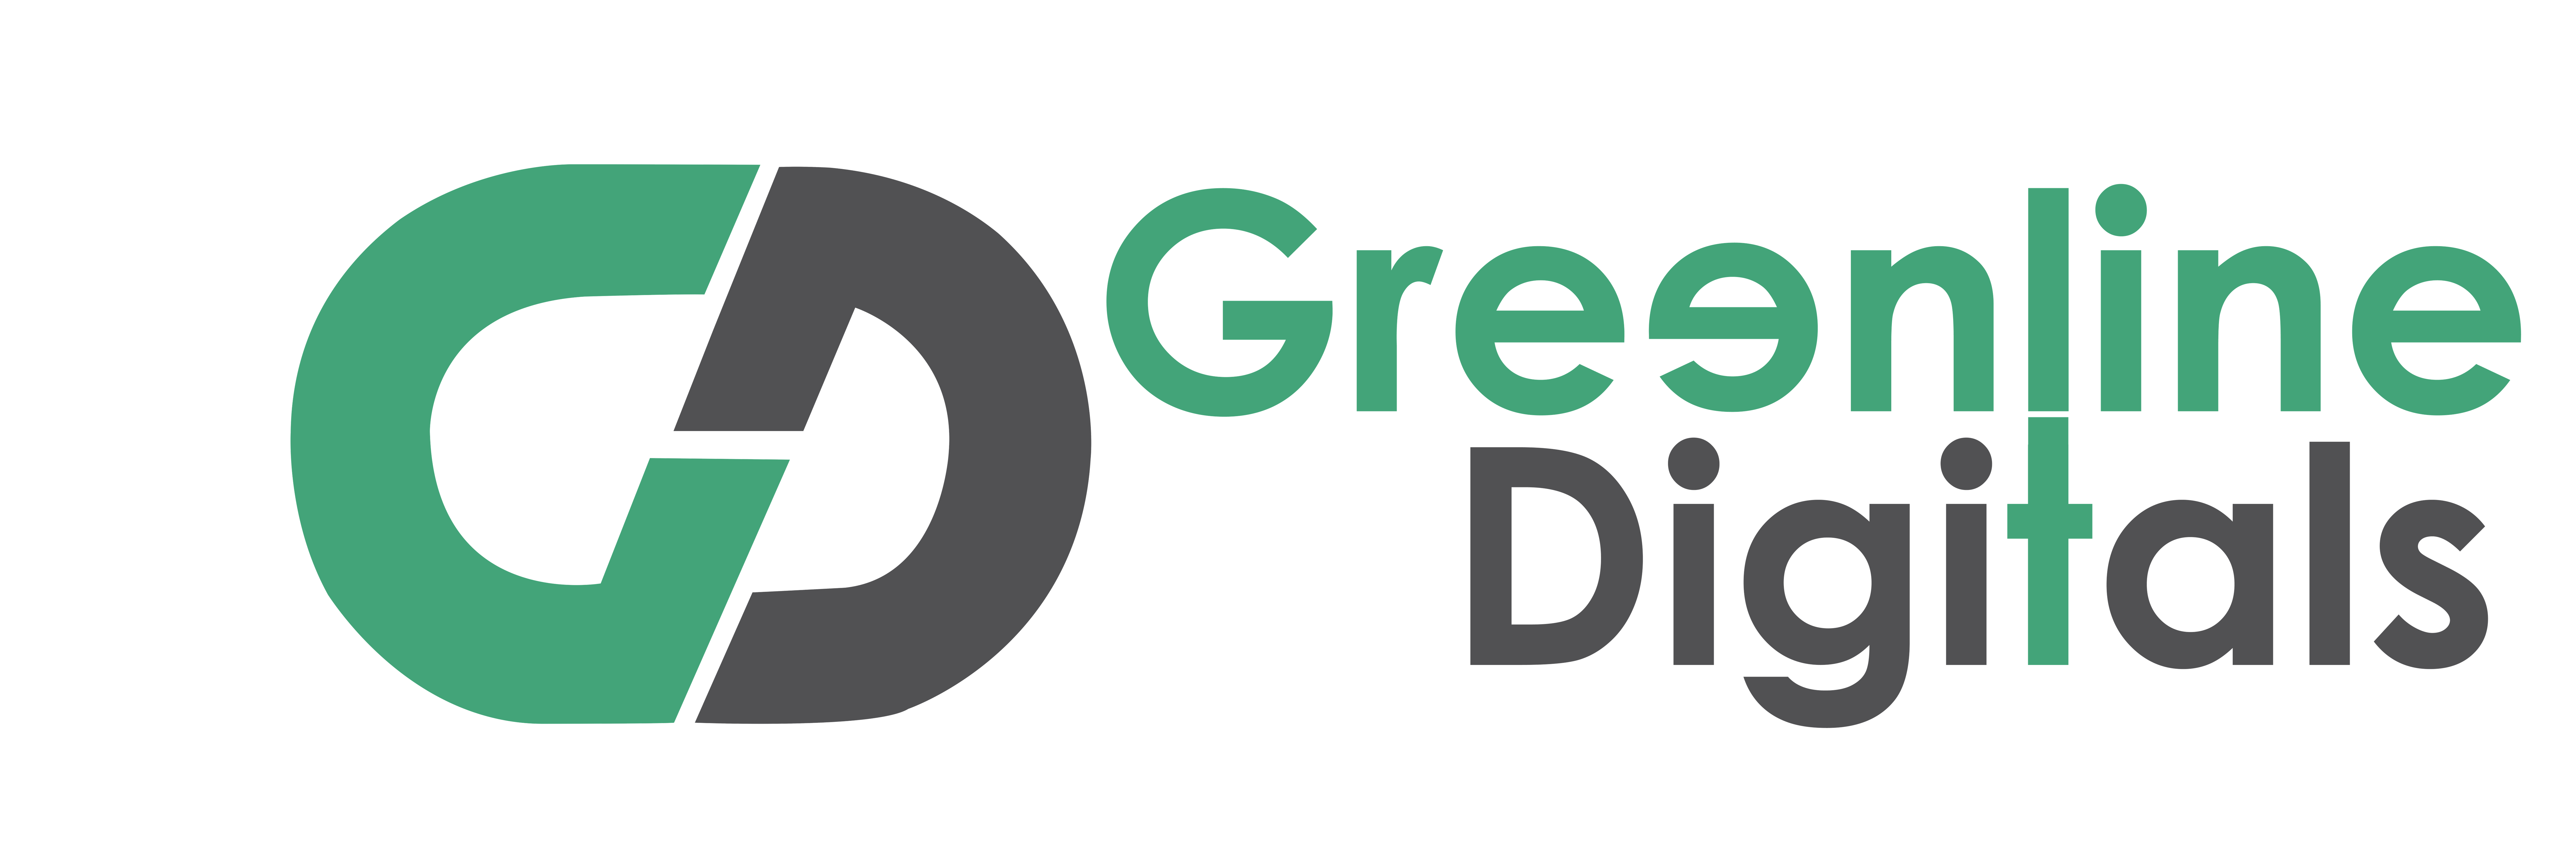 greenline digitals